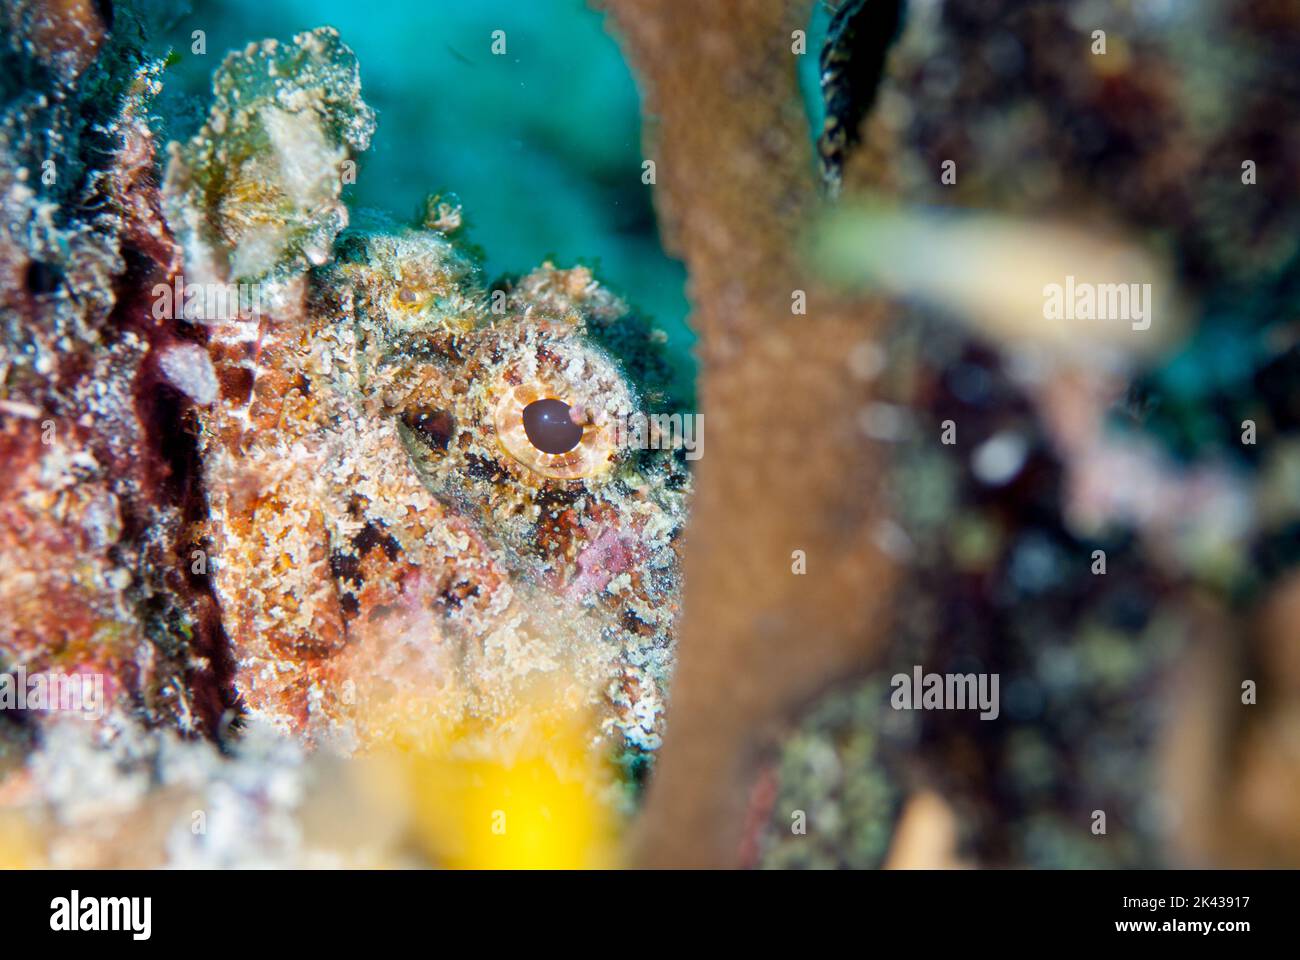 Scorpion fish in the reef Stock Photo